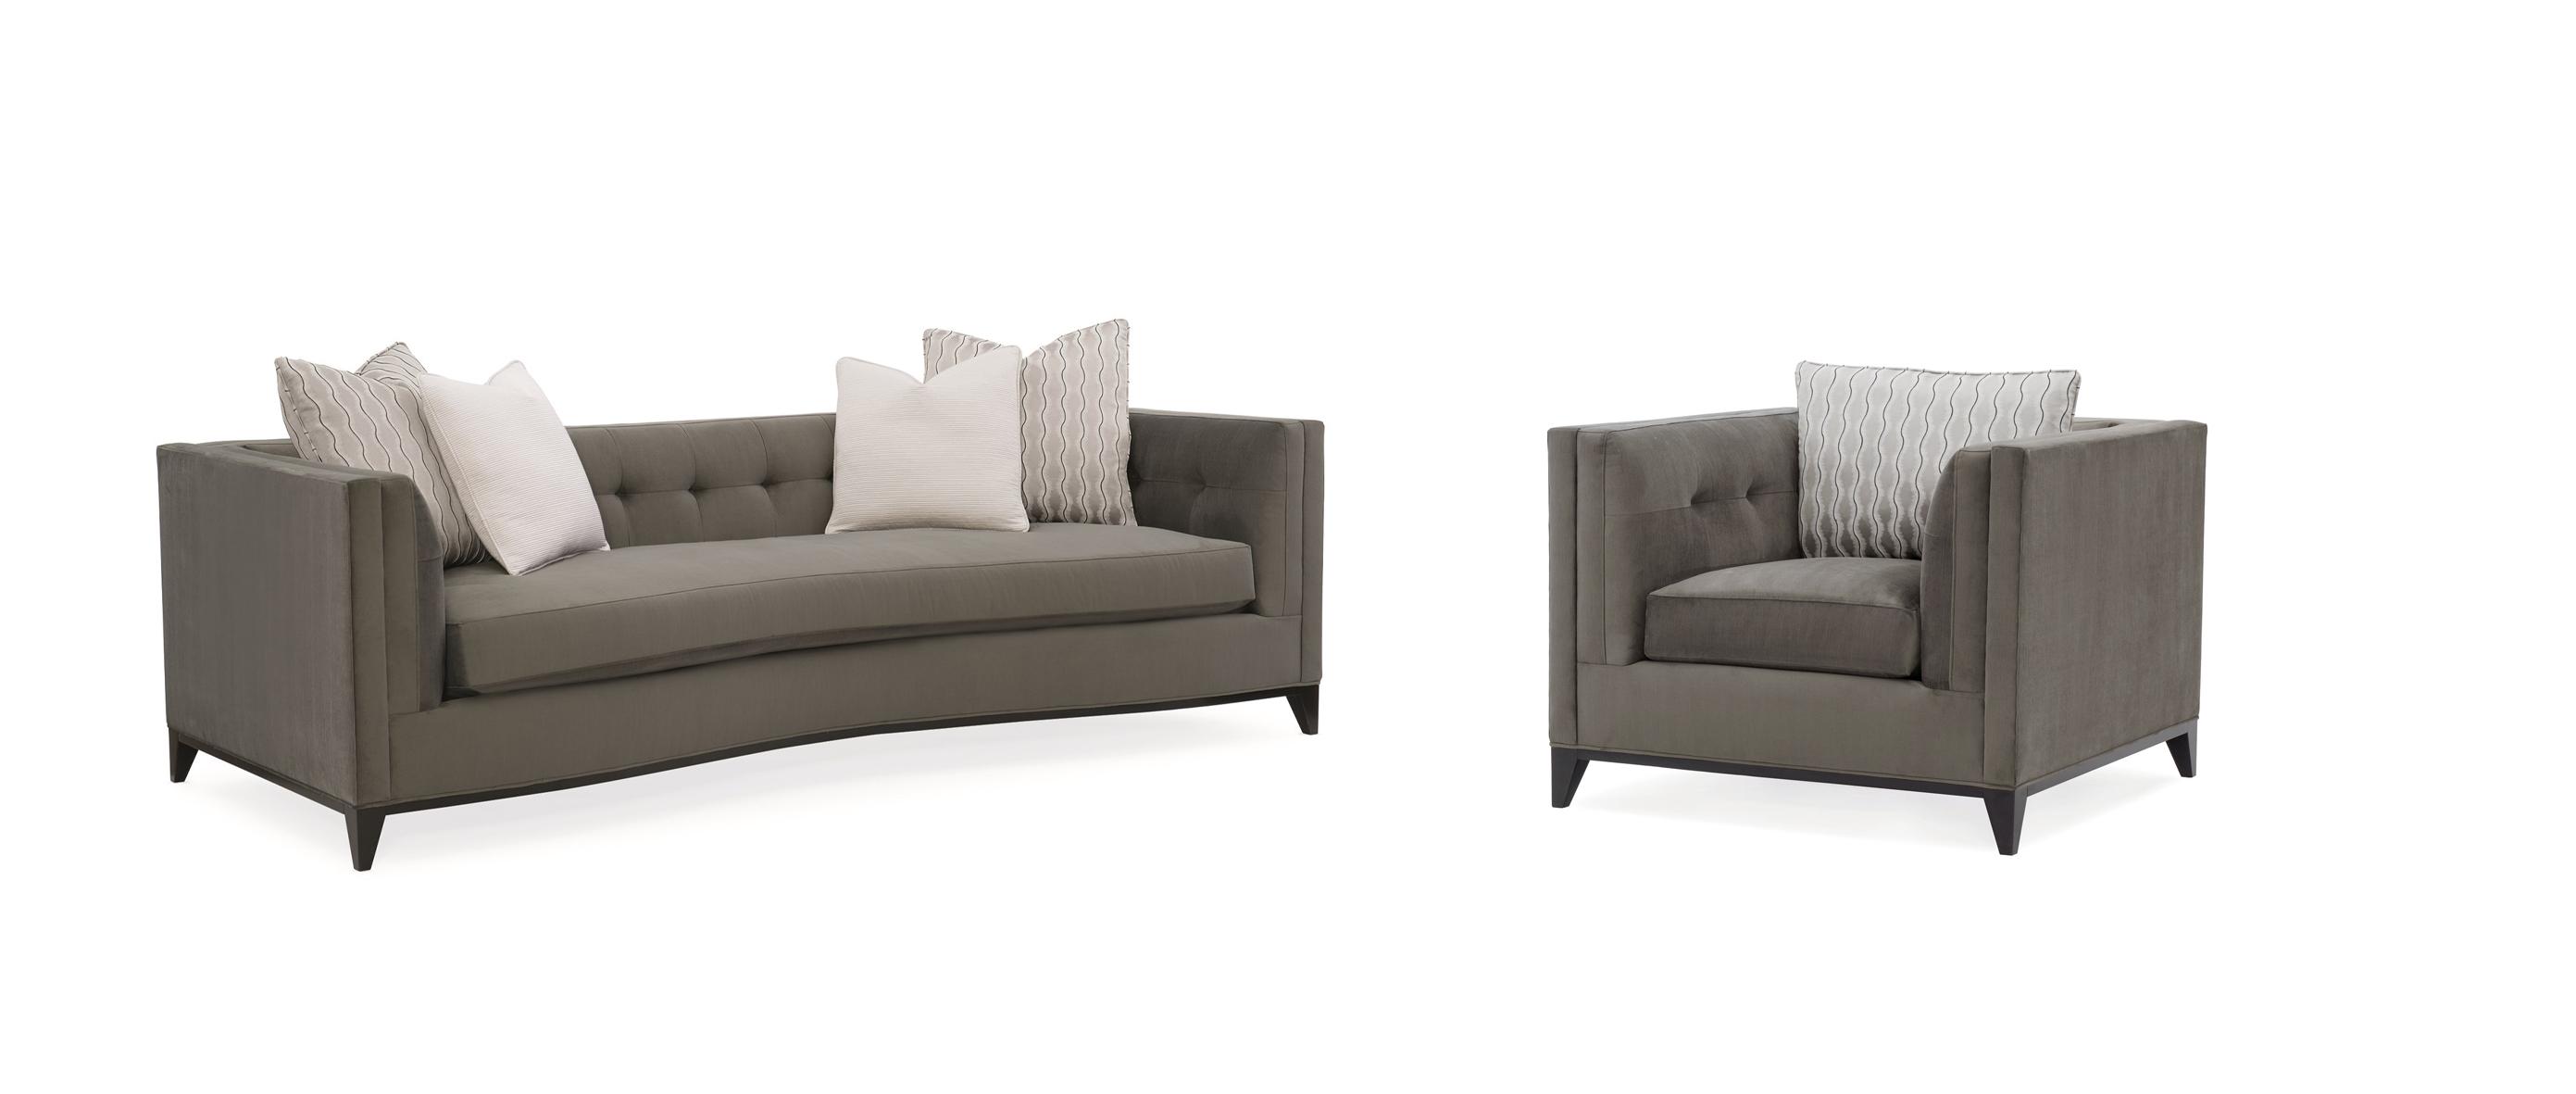 Contemporary Sofa and Chair GRACE SOFA M080-418-011-A-Set-2 in Ebony, Gray Velvet